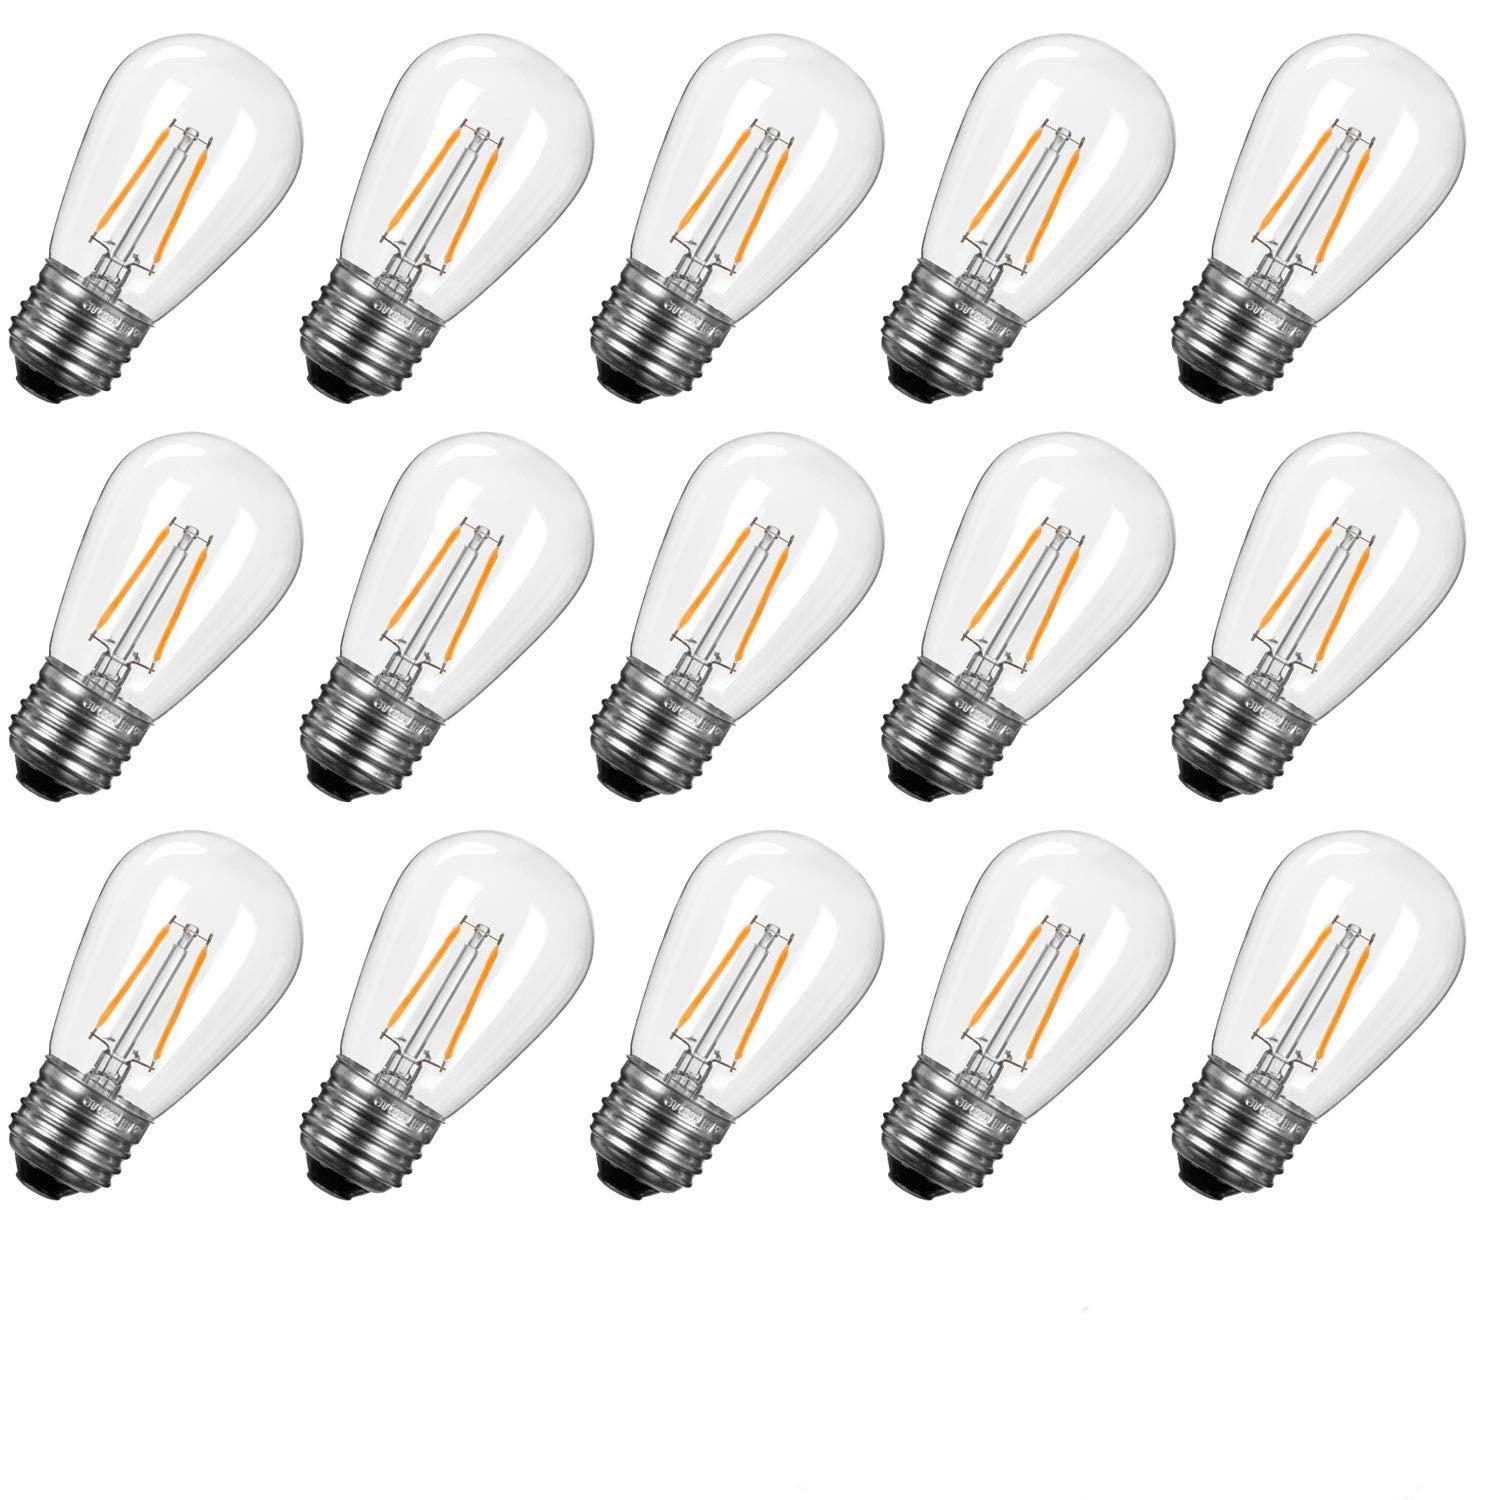 Minetom s14 led light bulbs 2700k, warm white, shatterproof lightbulbs equivalent to 11 w, dimmable e26 e27 shatterproof replacement 